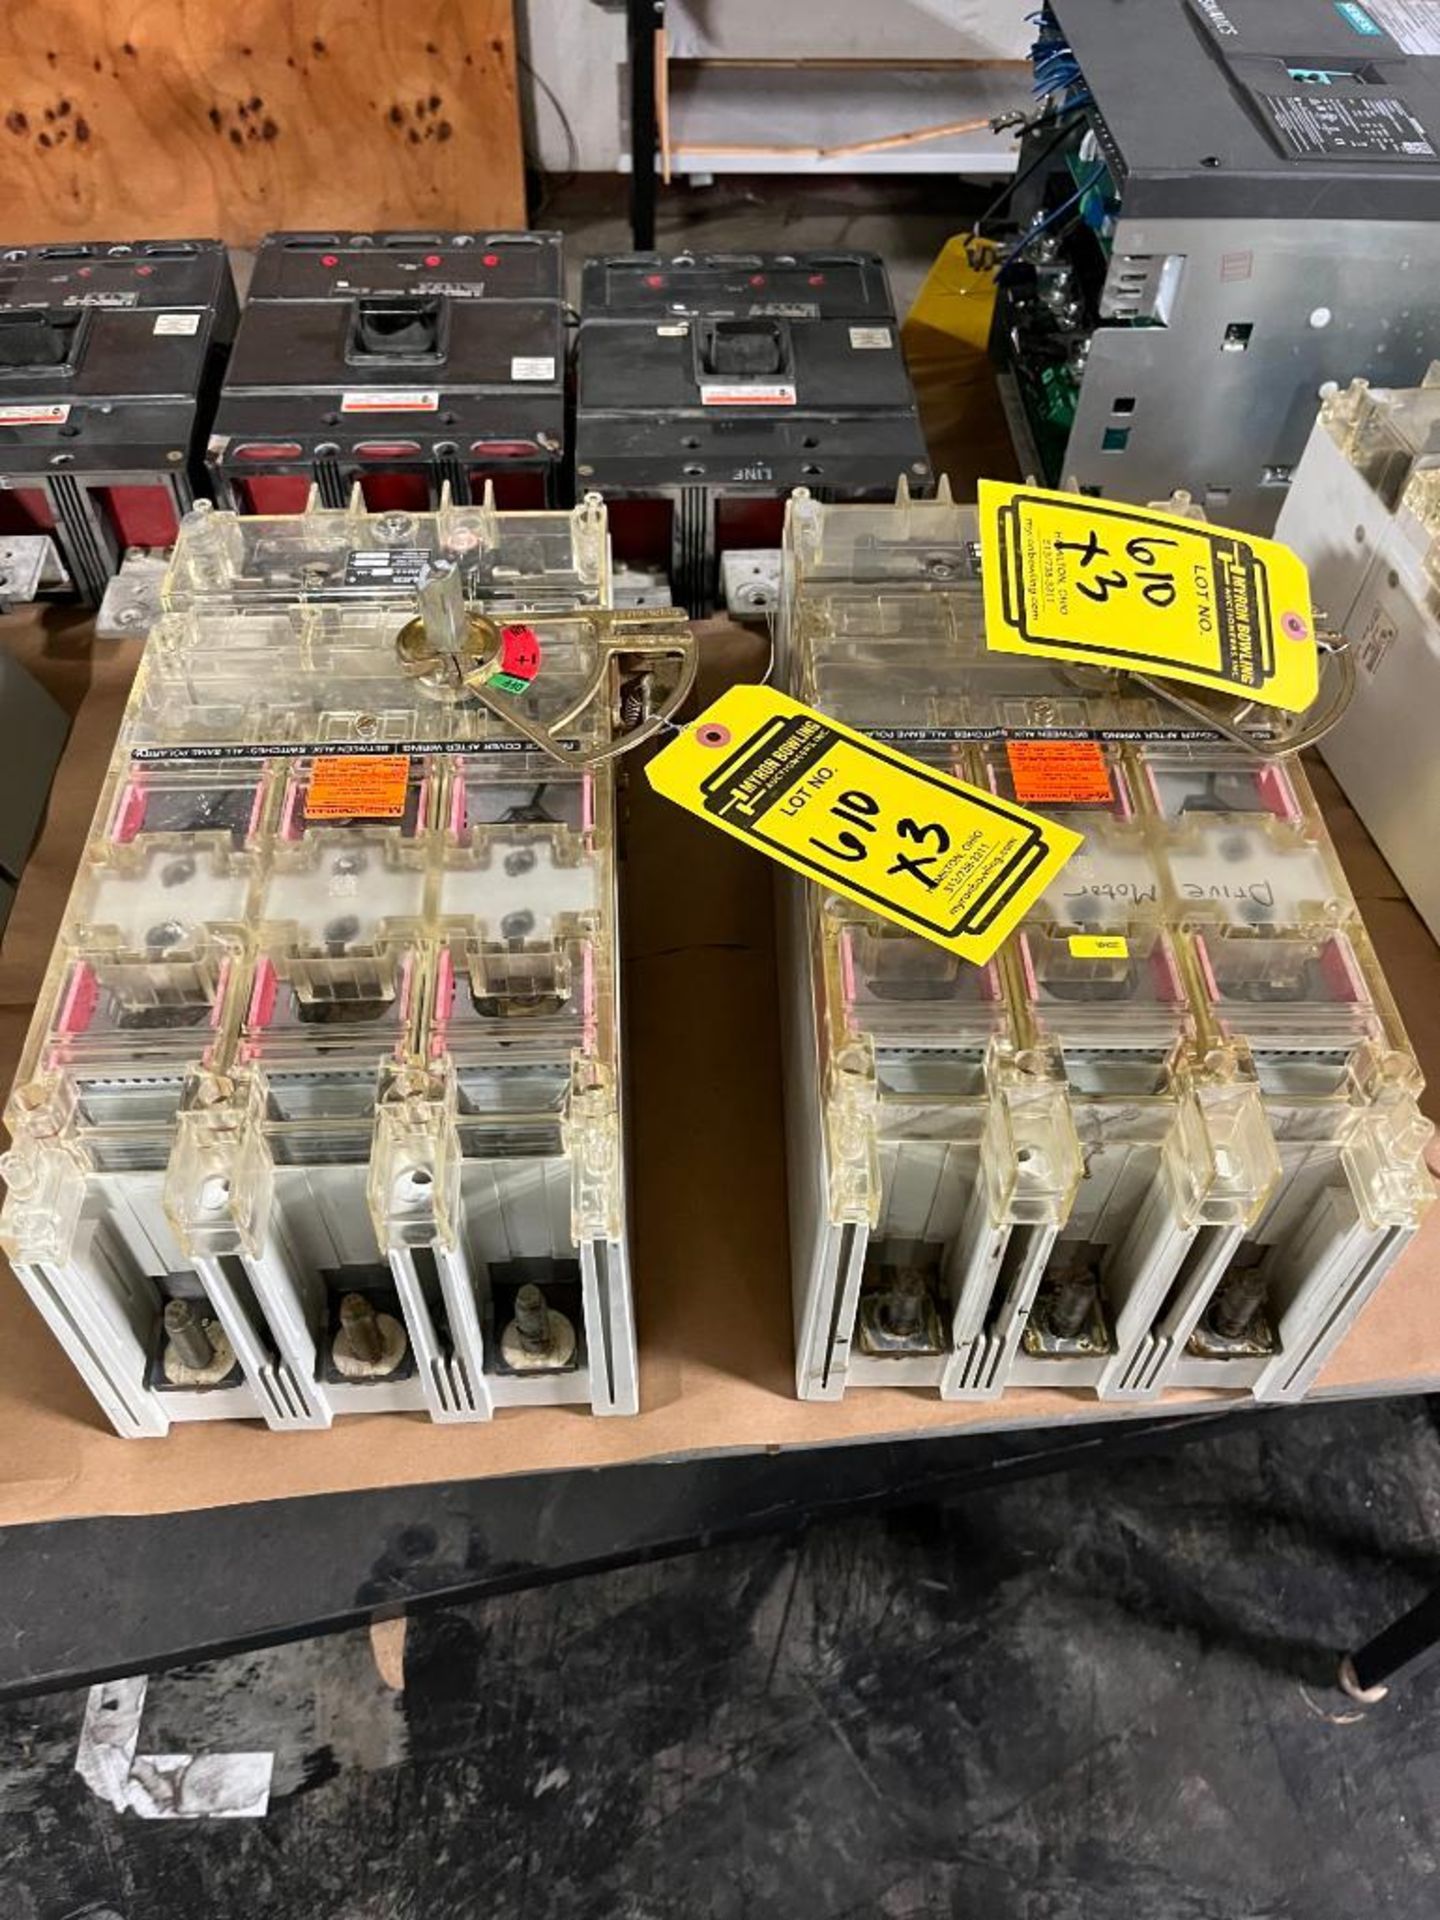 (3x) Klockner-Moeller NZMH11-630 Circuit Breakers, 600 VAC, (2) 600 Amps, (1) 400 Amps